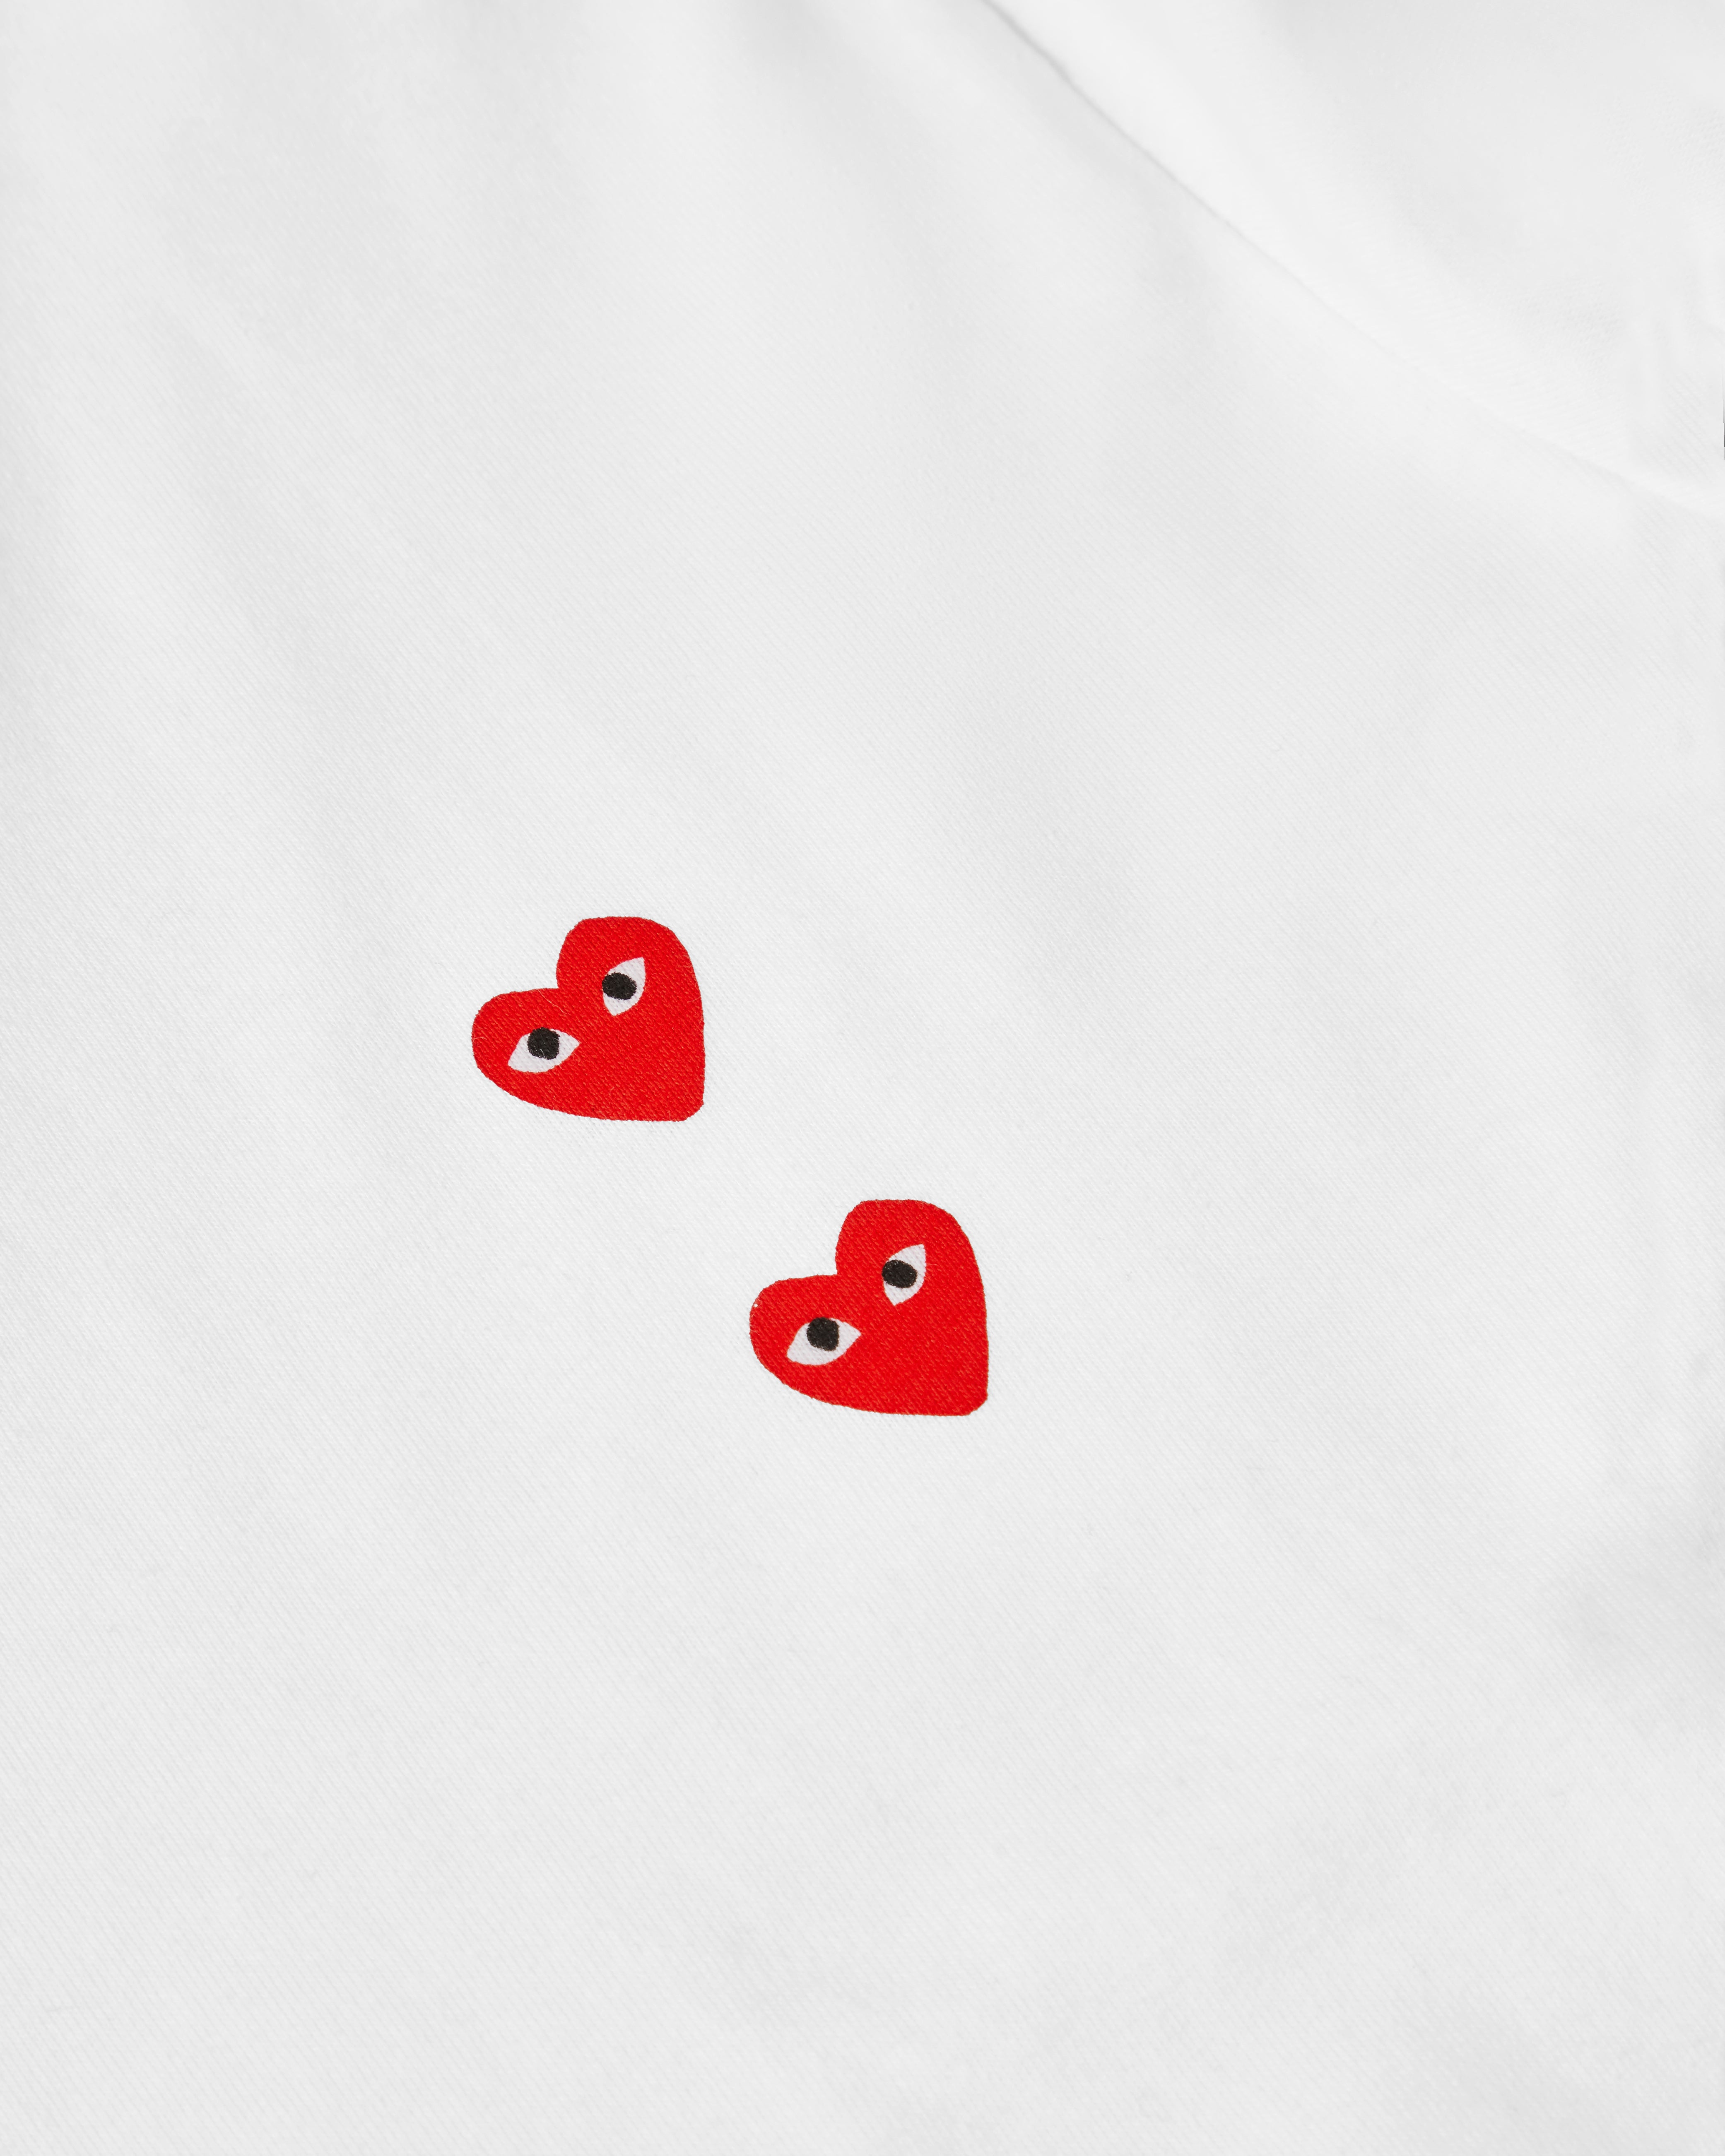 Play - Multi Red Heart Longsleeve T-Shirt - (White)